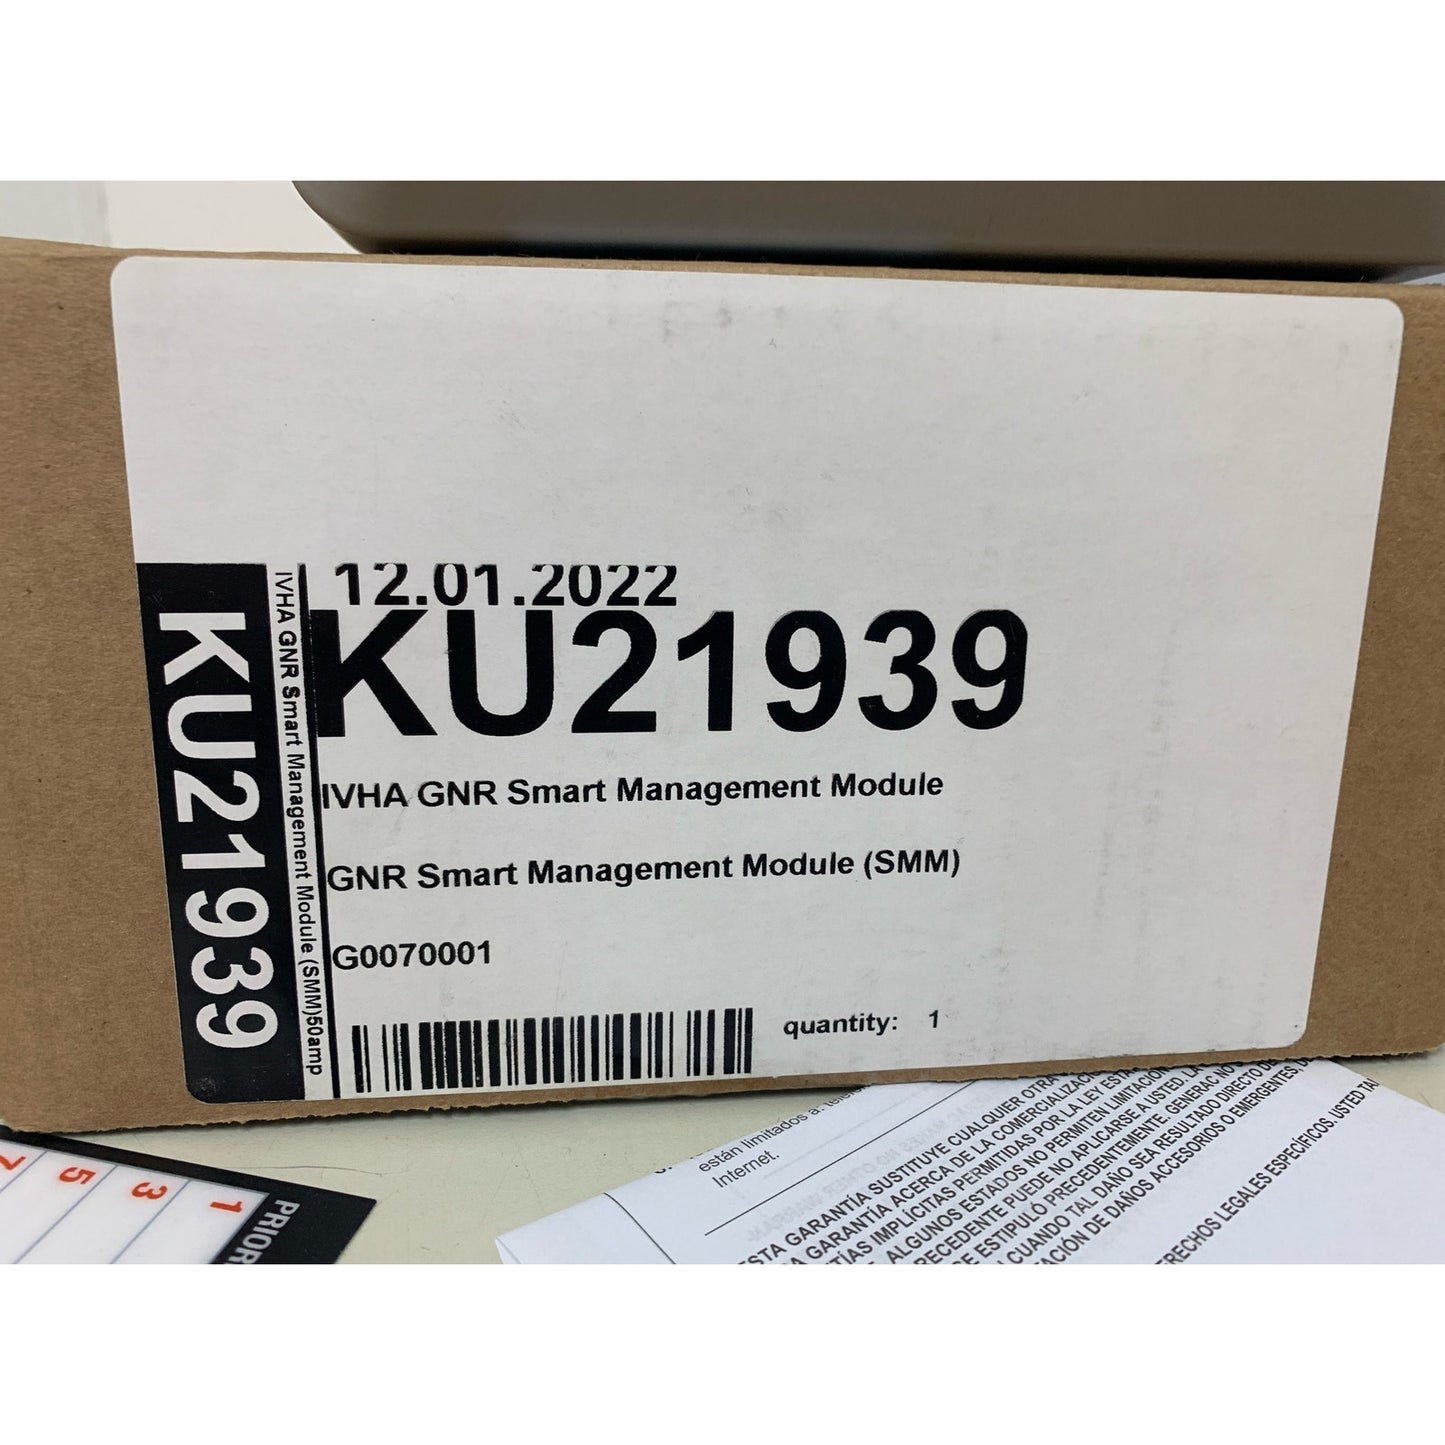 New Generac IVHA Smart Management Module KU21939 50AMP Unit in Original Box